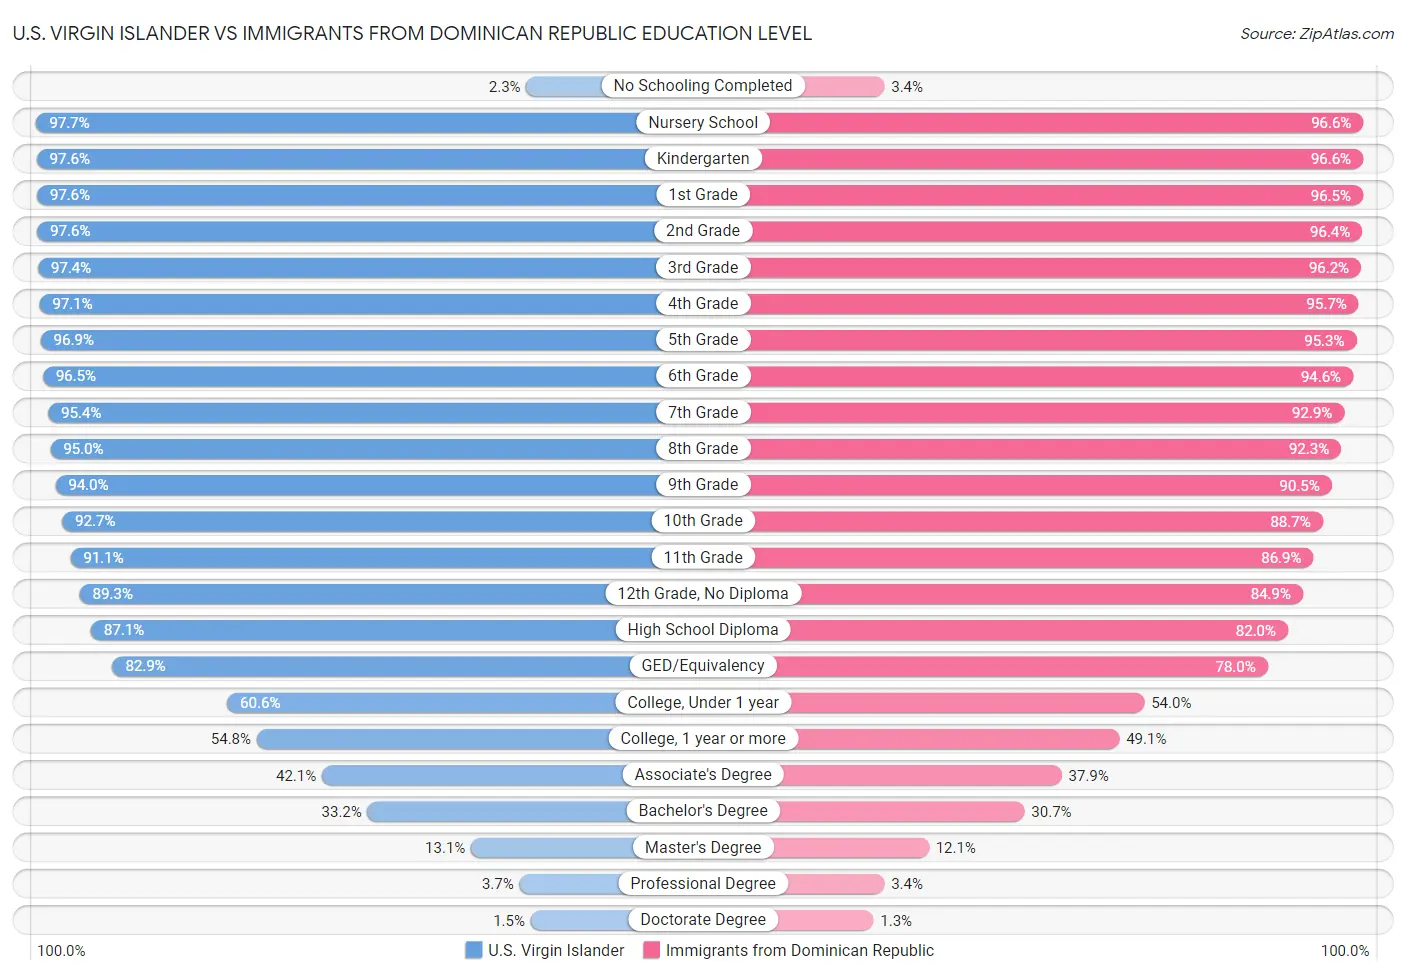 U.S. Virgin Islander vs Immigrants from Dominican Republic Education Level